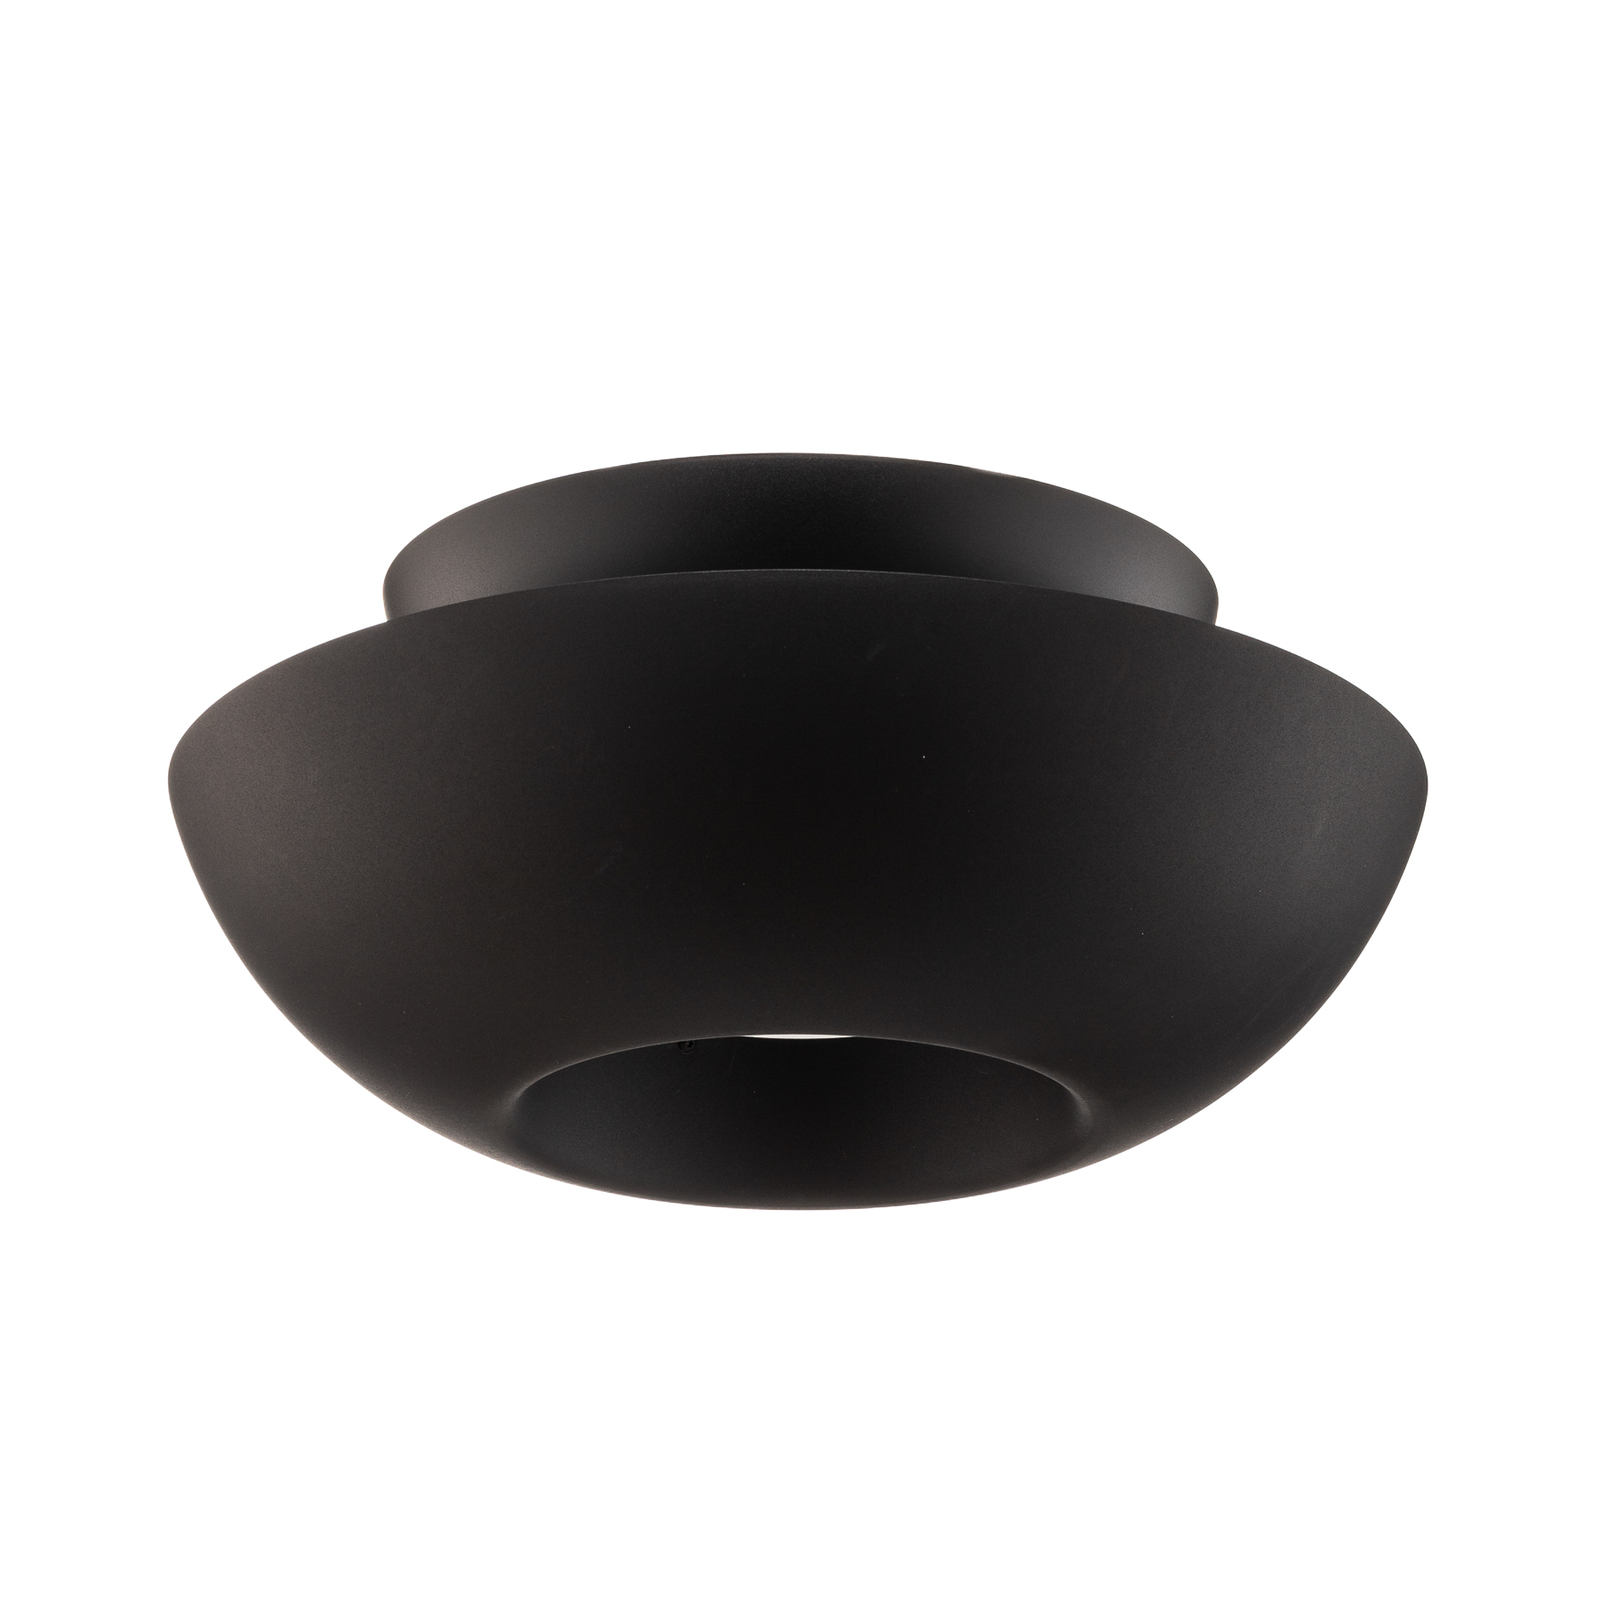 Lucande Kellina ceiling light in black